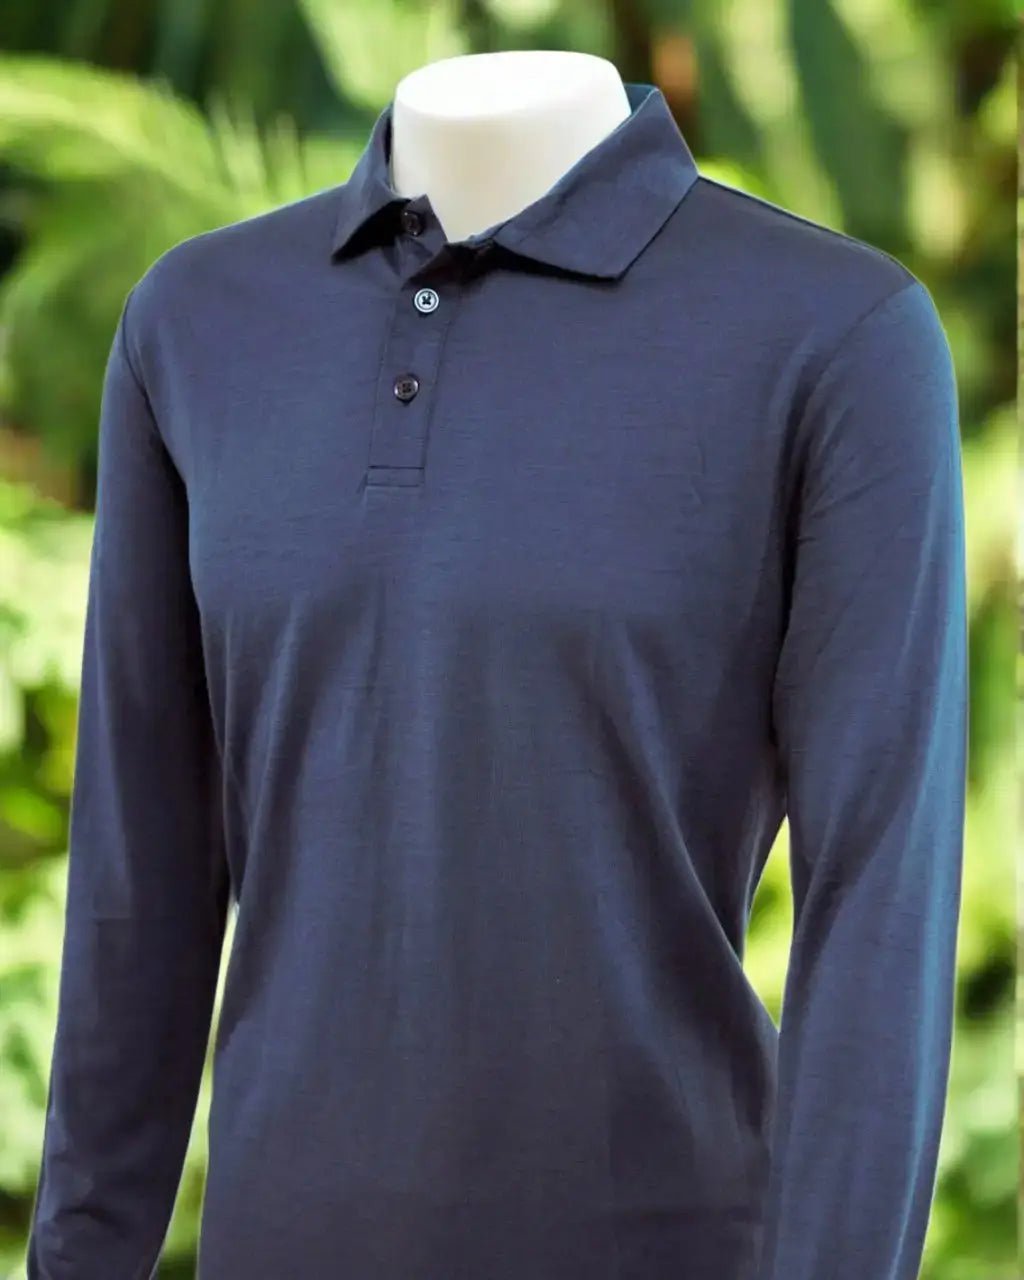 Long Sleeve Polo Shirt - Unisex - Australian Merino Wool - Outer Space Blue - Dark Navy